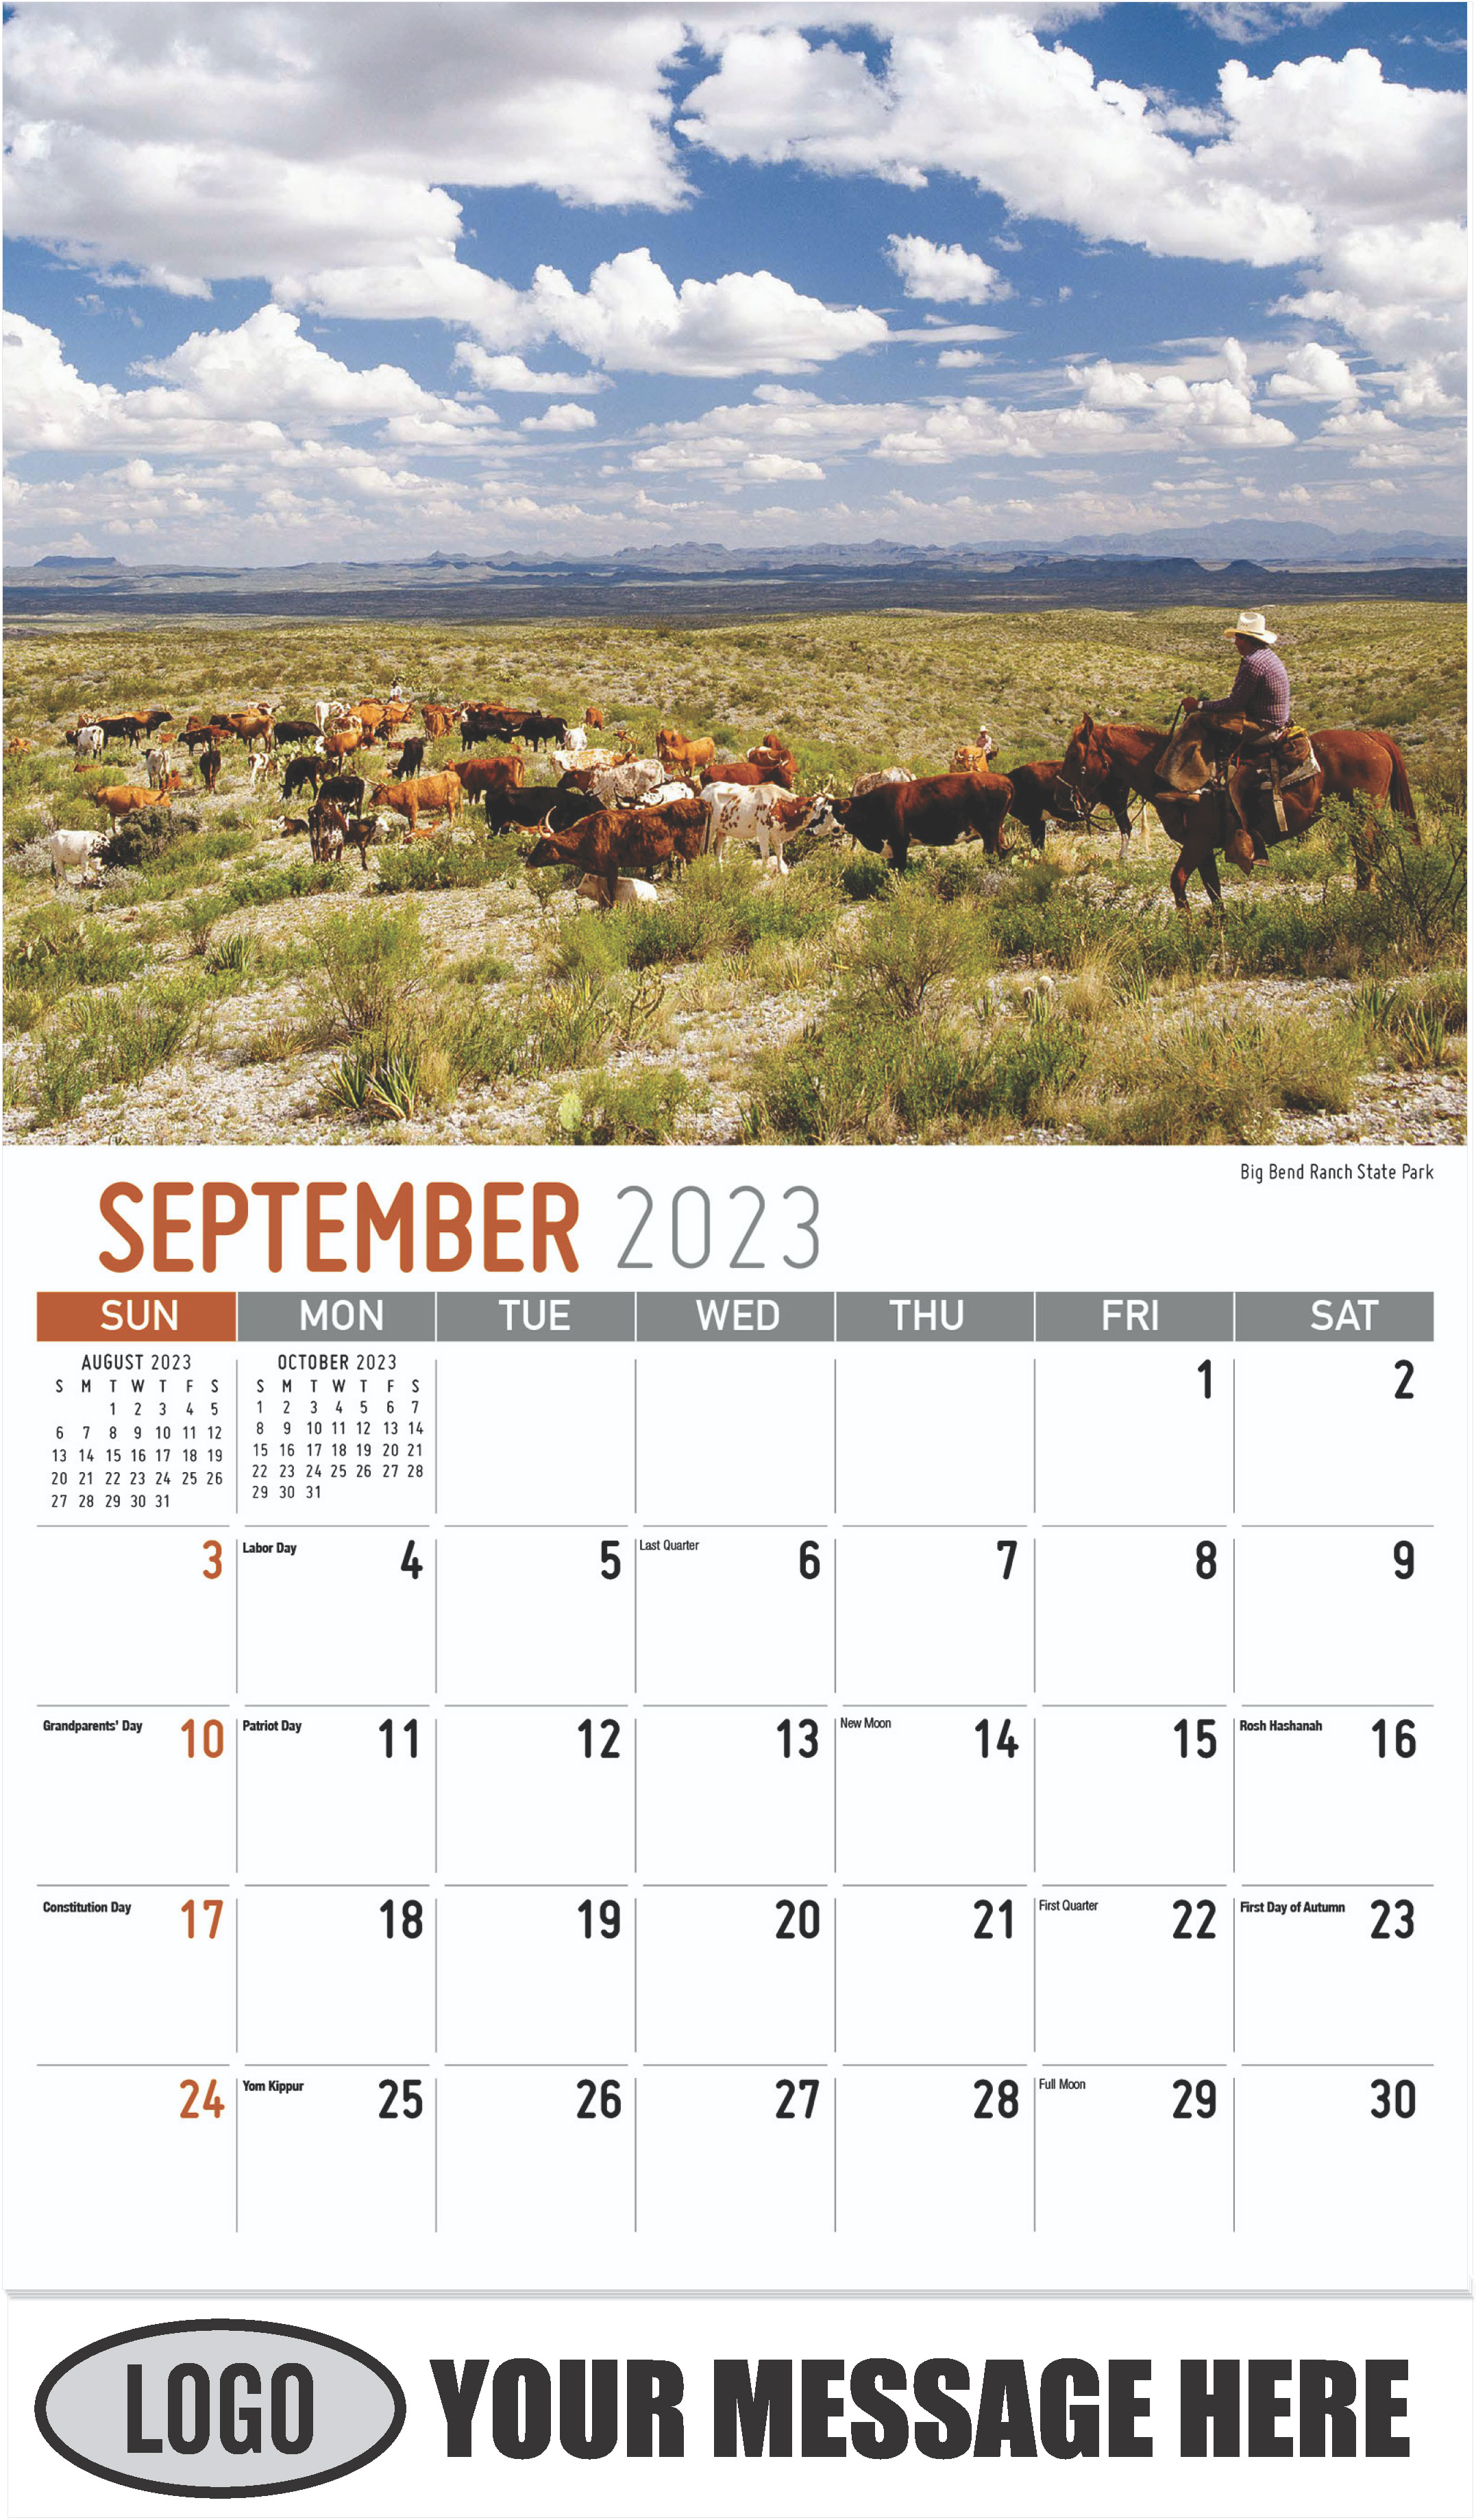 Big Bend Ranch State Park - September - Scenes of Texas 2023 Promotional Calendar